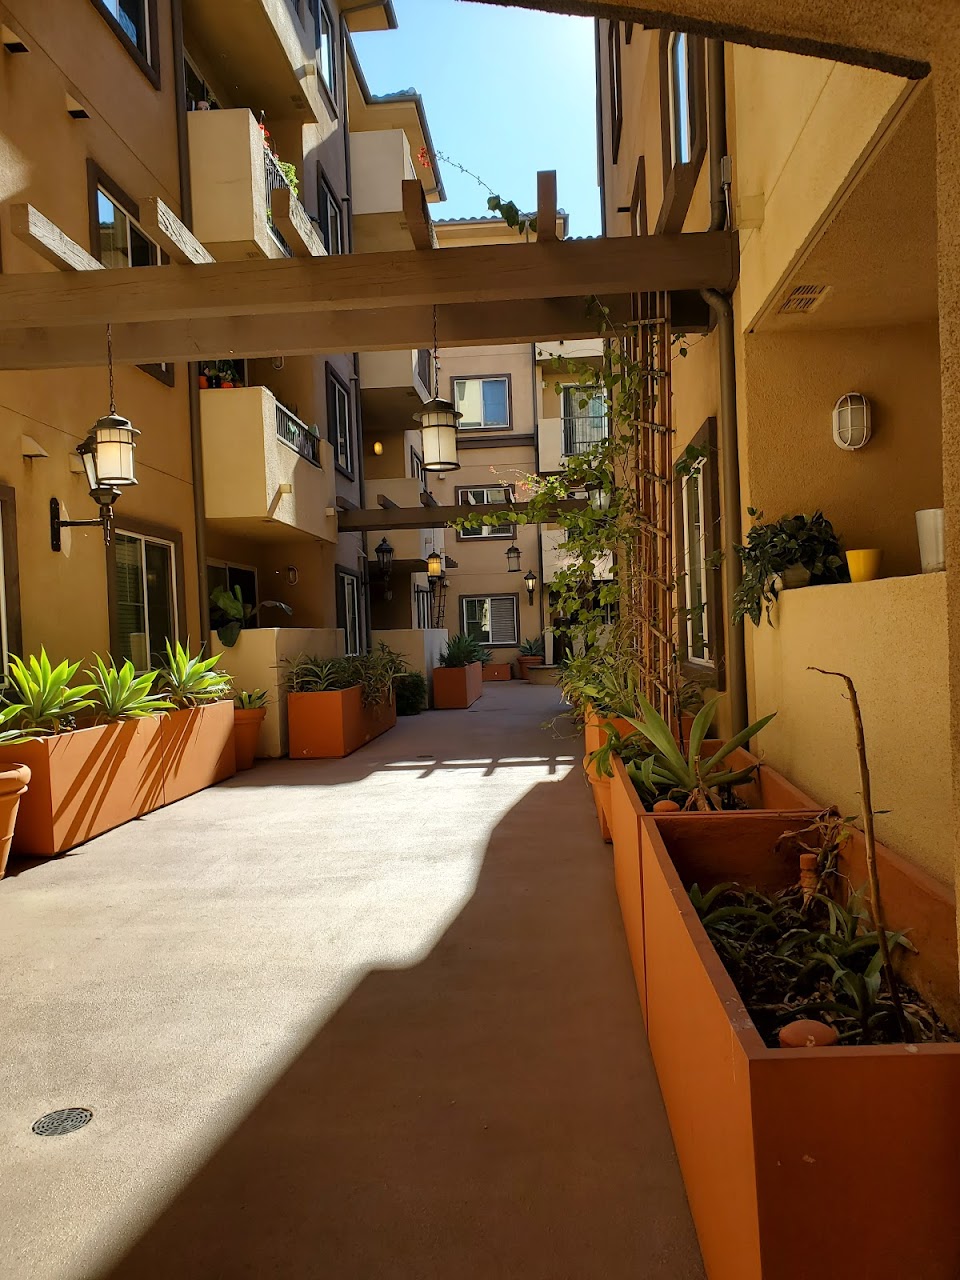 Photo of LA CORUNA SENIOR APTS. Affordable housing located at 15301 LANARK ST VAN NUYS, CA 91406